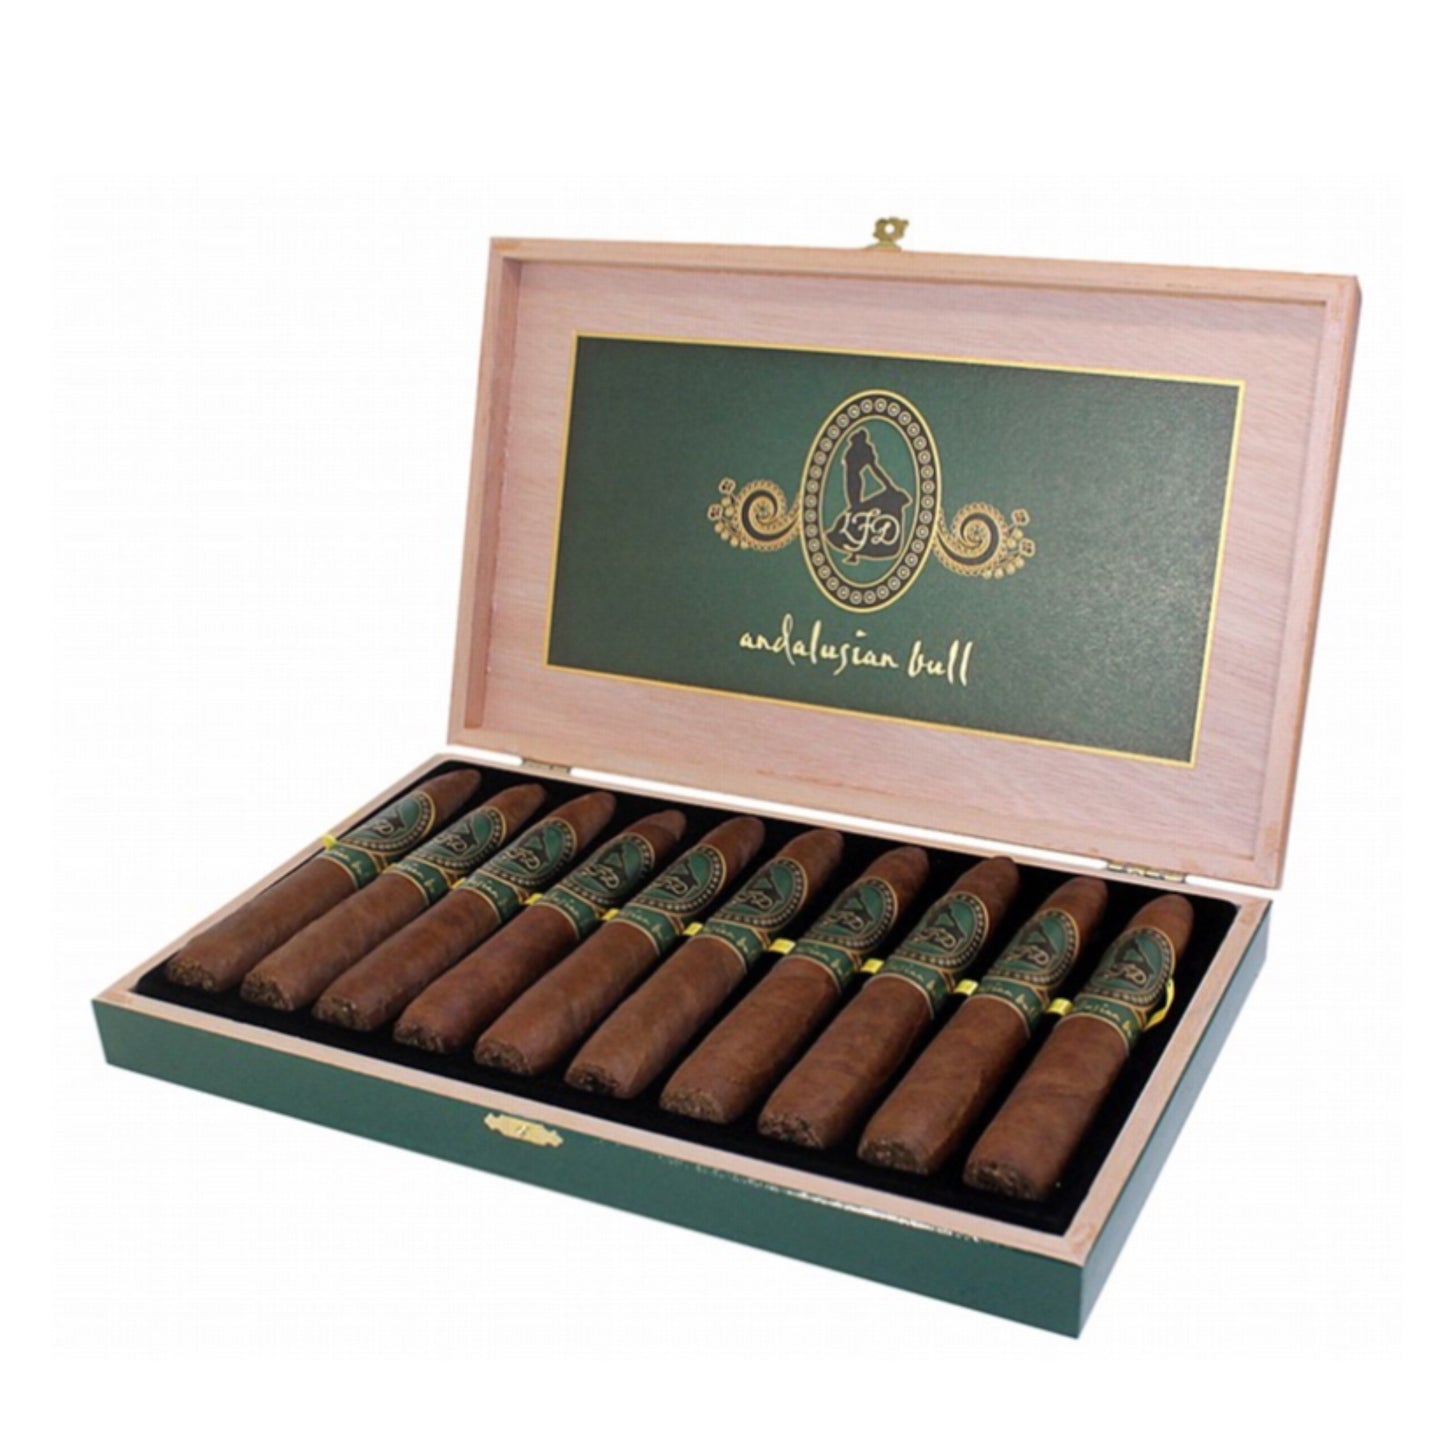 La Flor Dominicana Andalusian Bull Box of 10 cigars